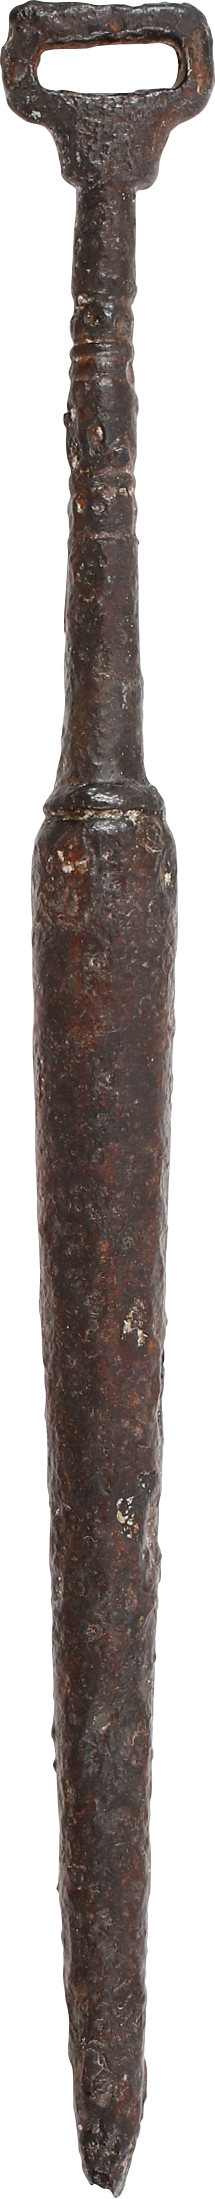 MEDIEVAL PLUMB BOB, 11TH-14TH CENTURY - Fagan Arms